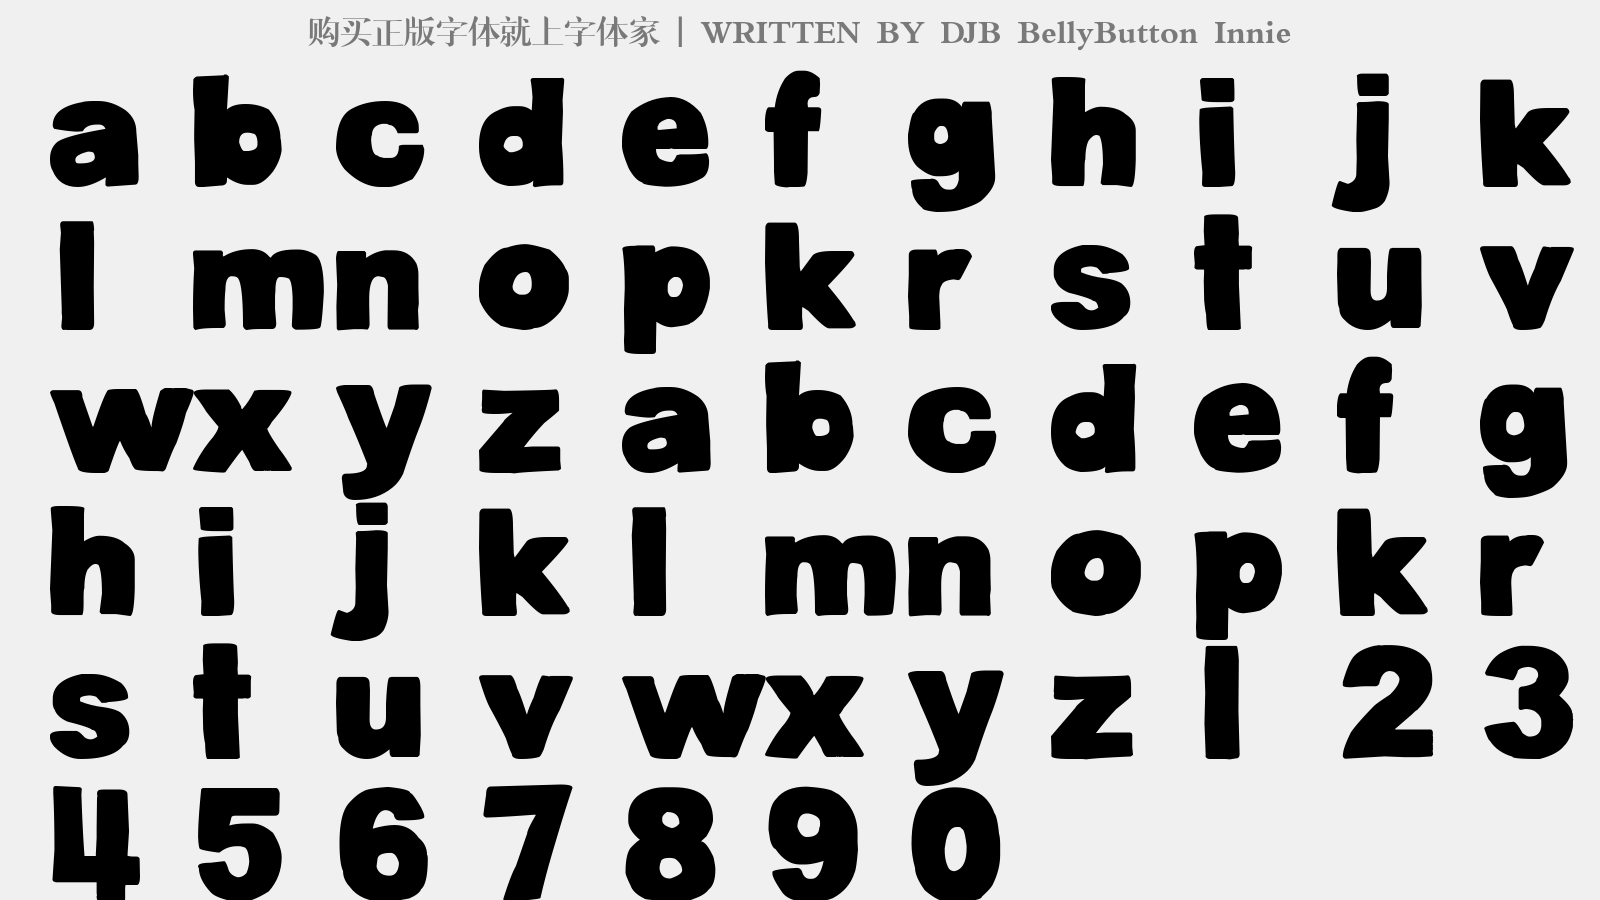 DJB BellyButton Innie - 大写字母/小写字母/数字